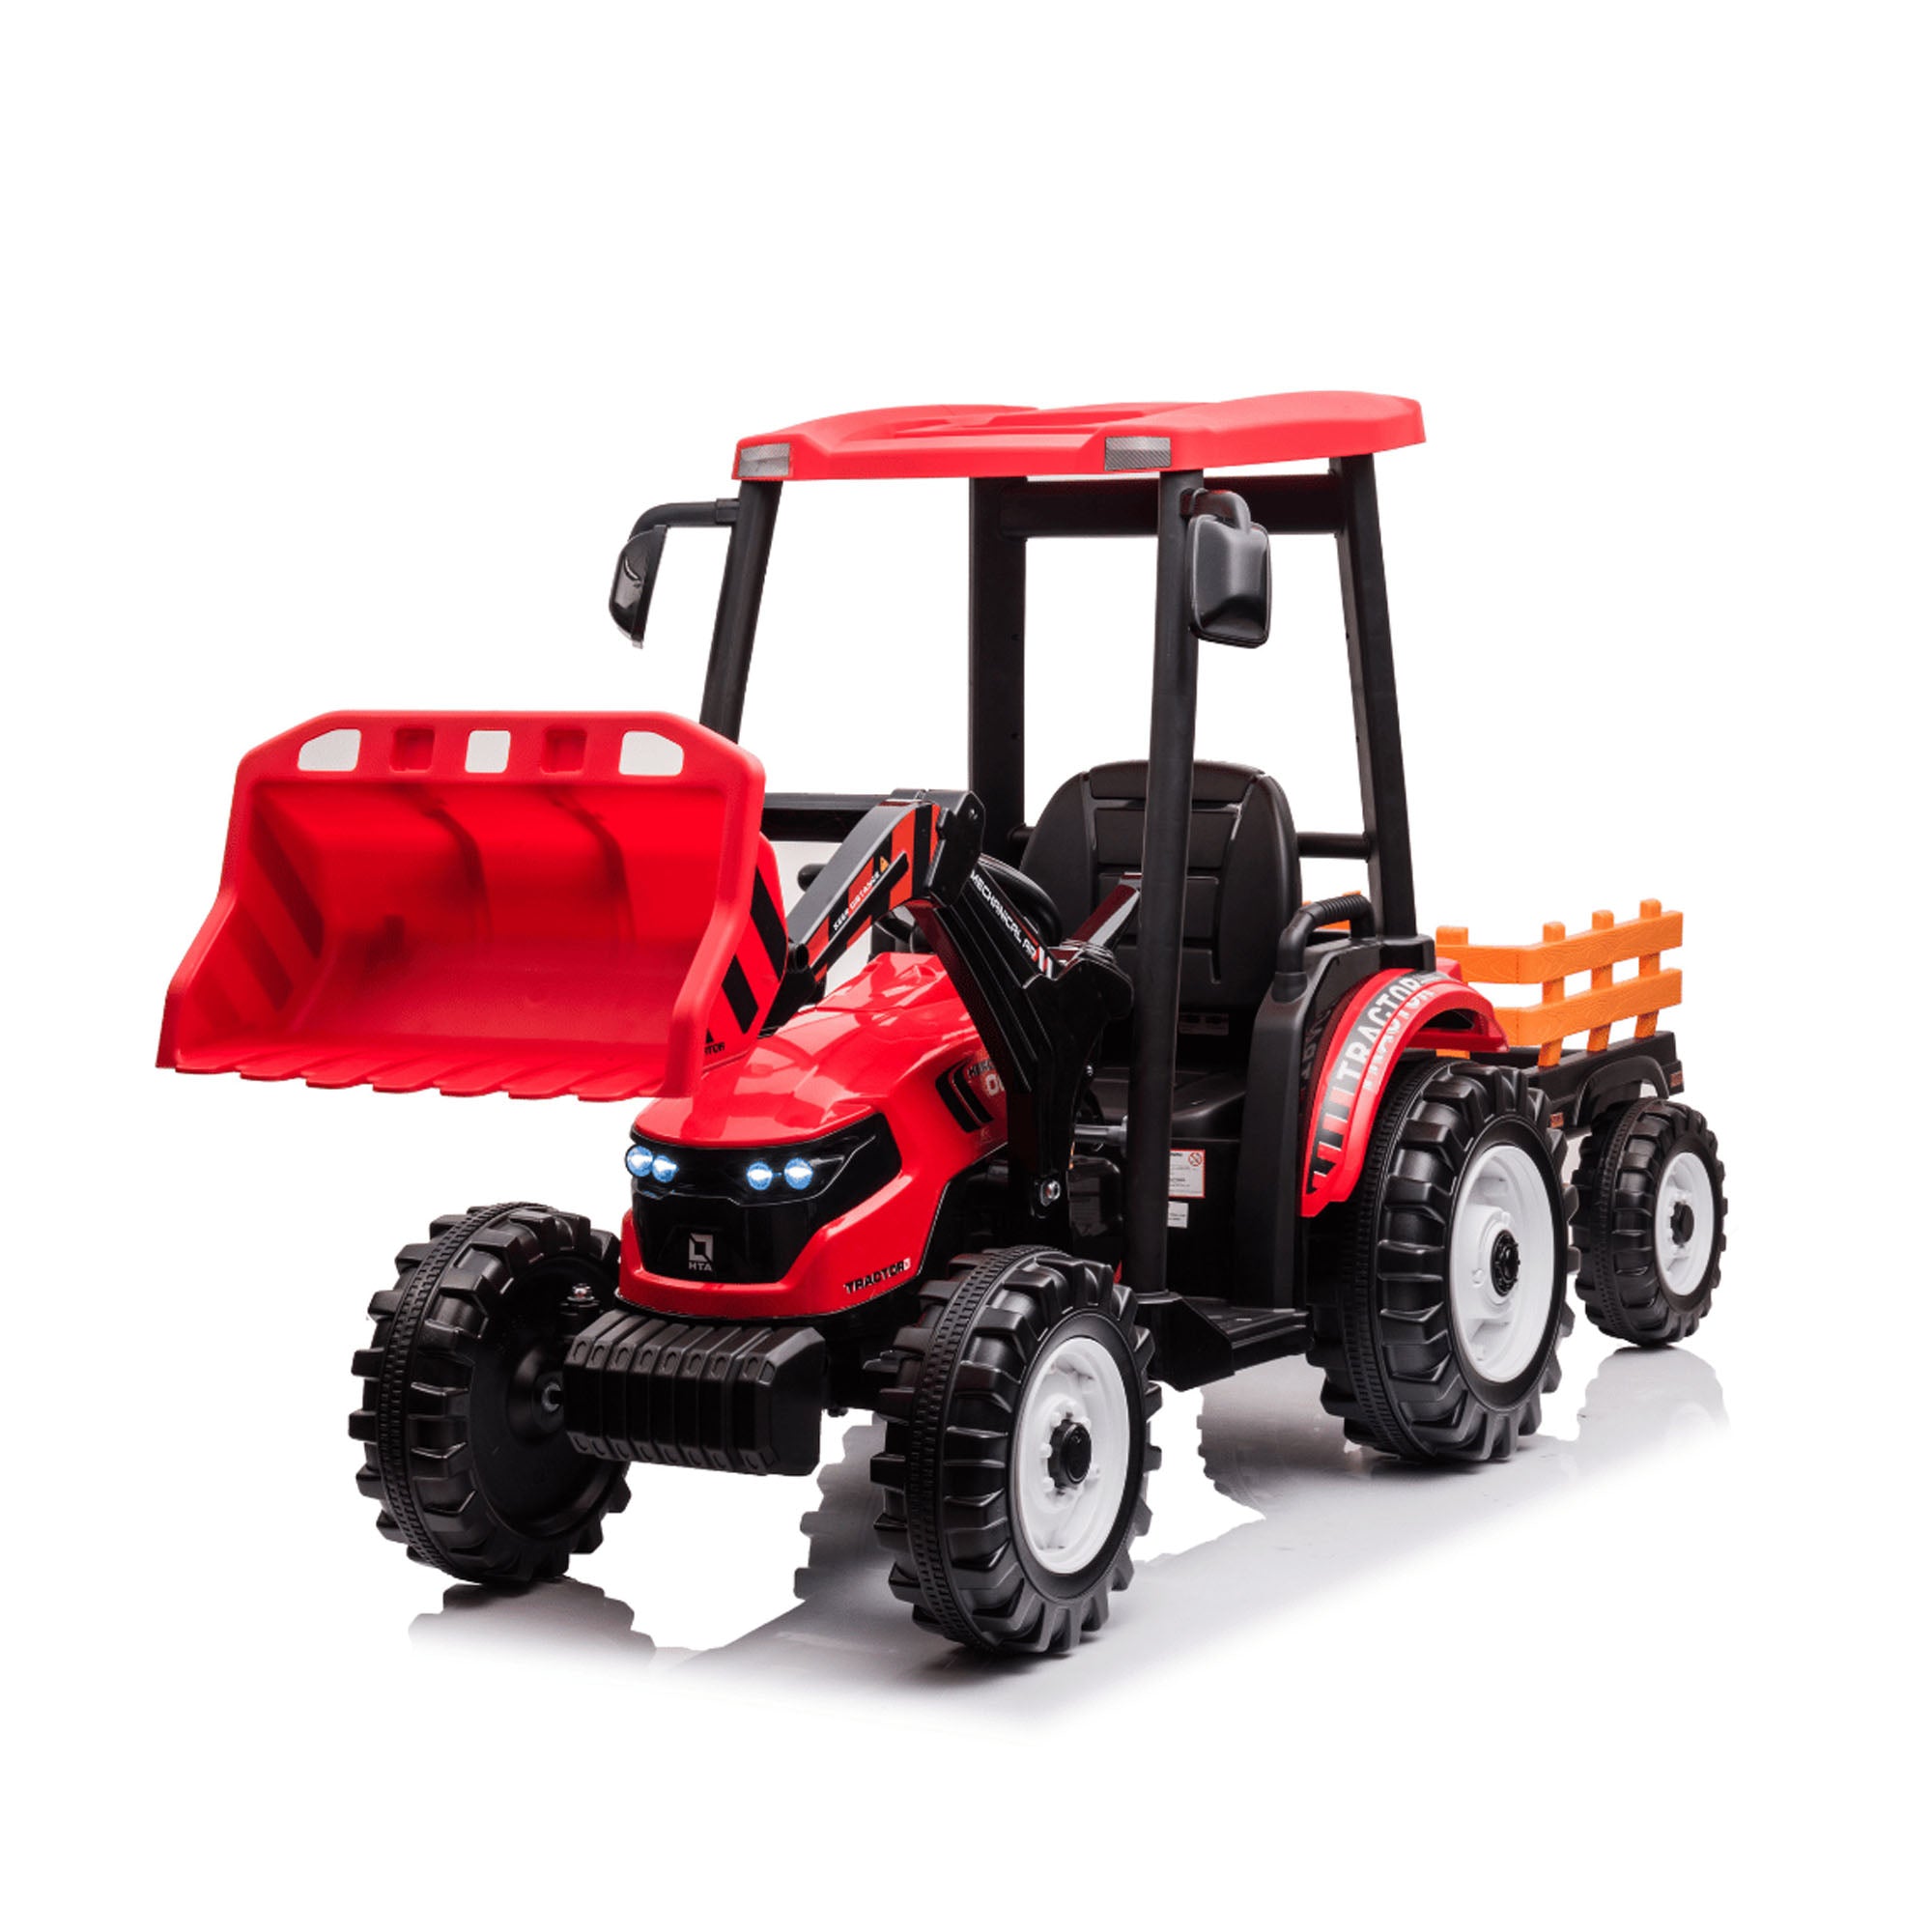 Ride On Tractor For Kids Excavator - DerakBikes